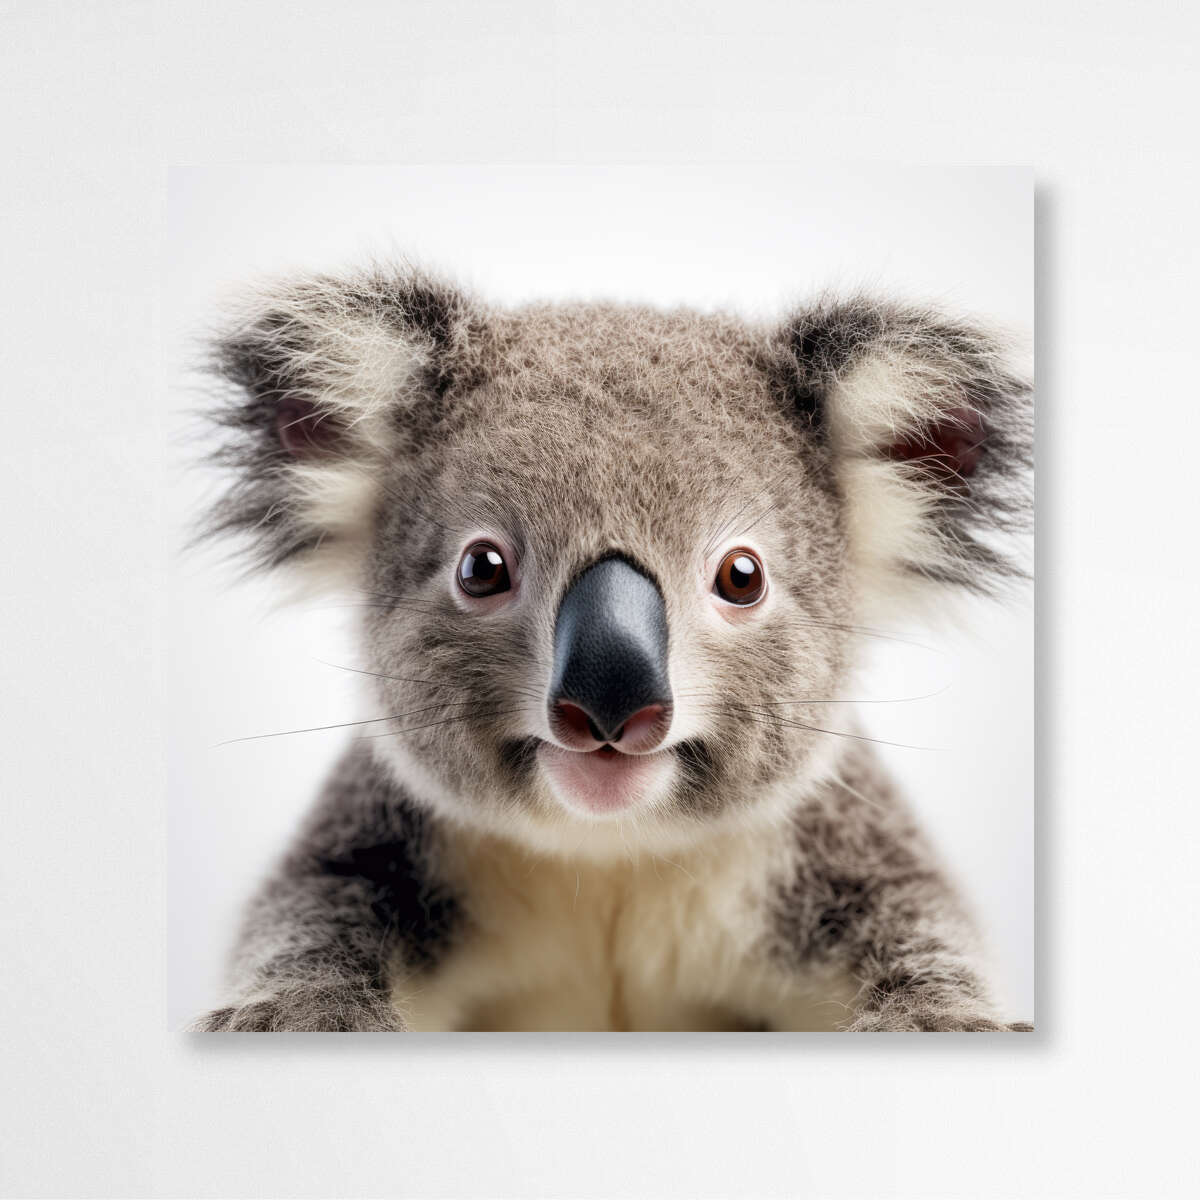 Portrait of a Koala | Australiana Wall Art Prints - The Canvas Hive